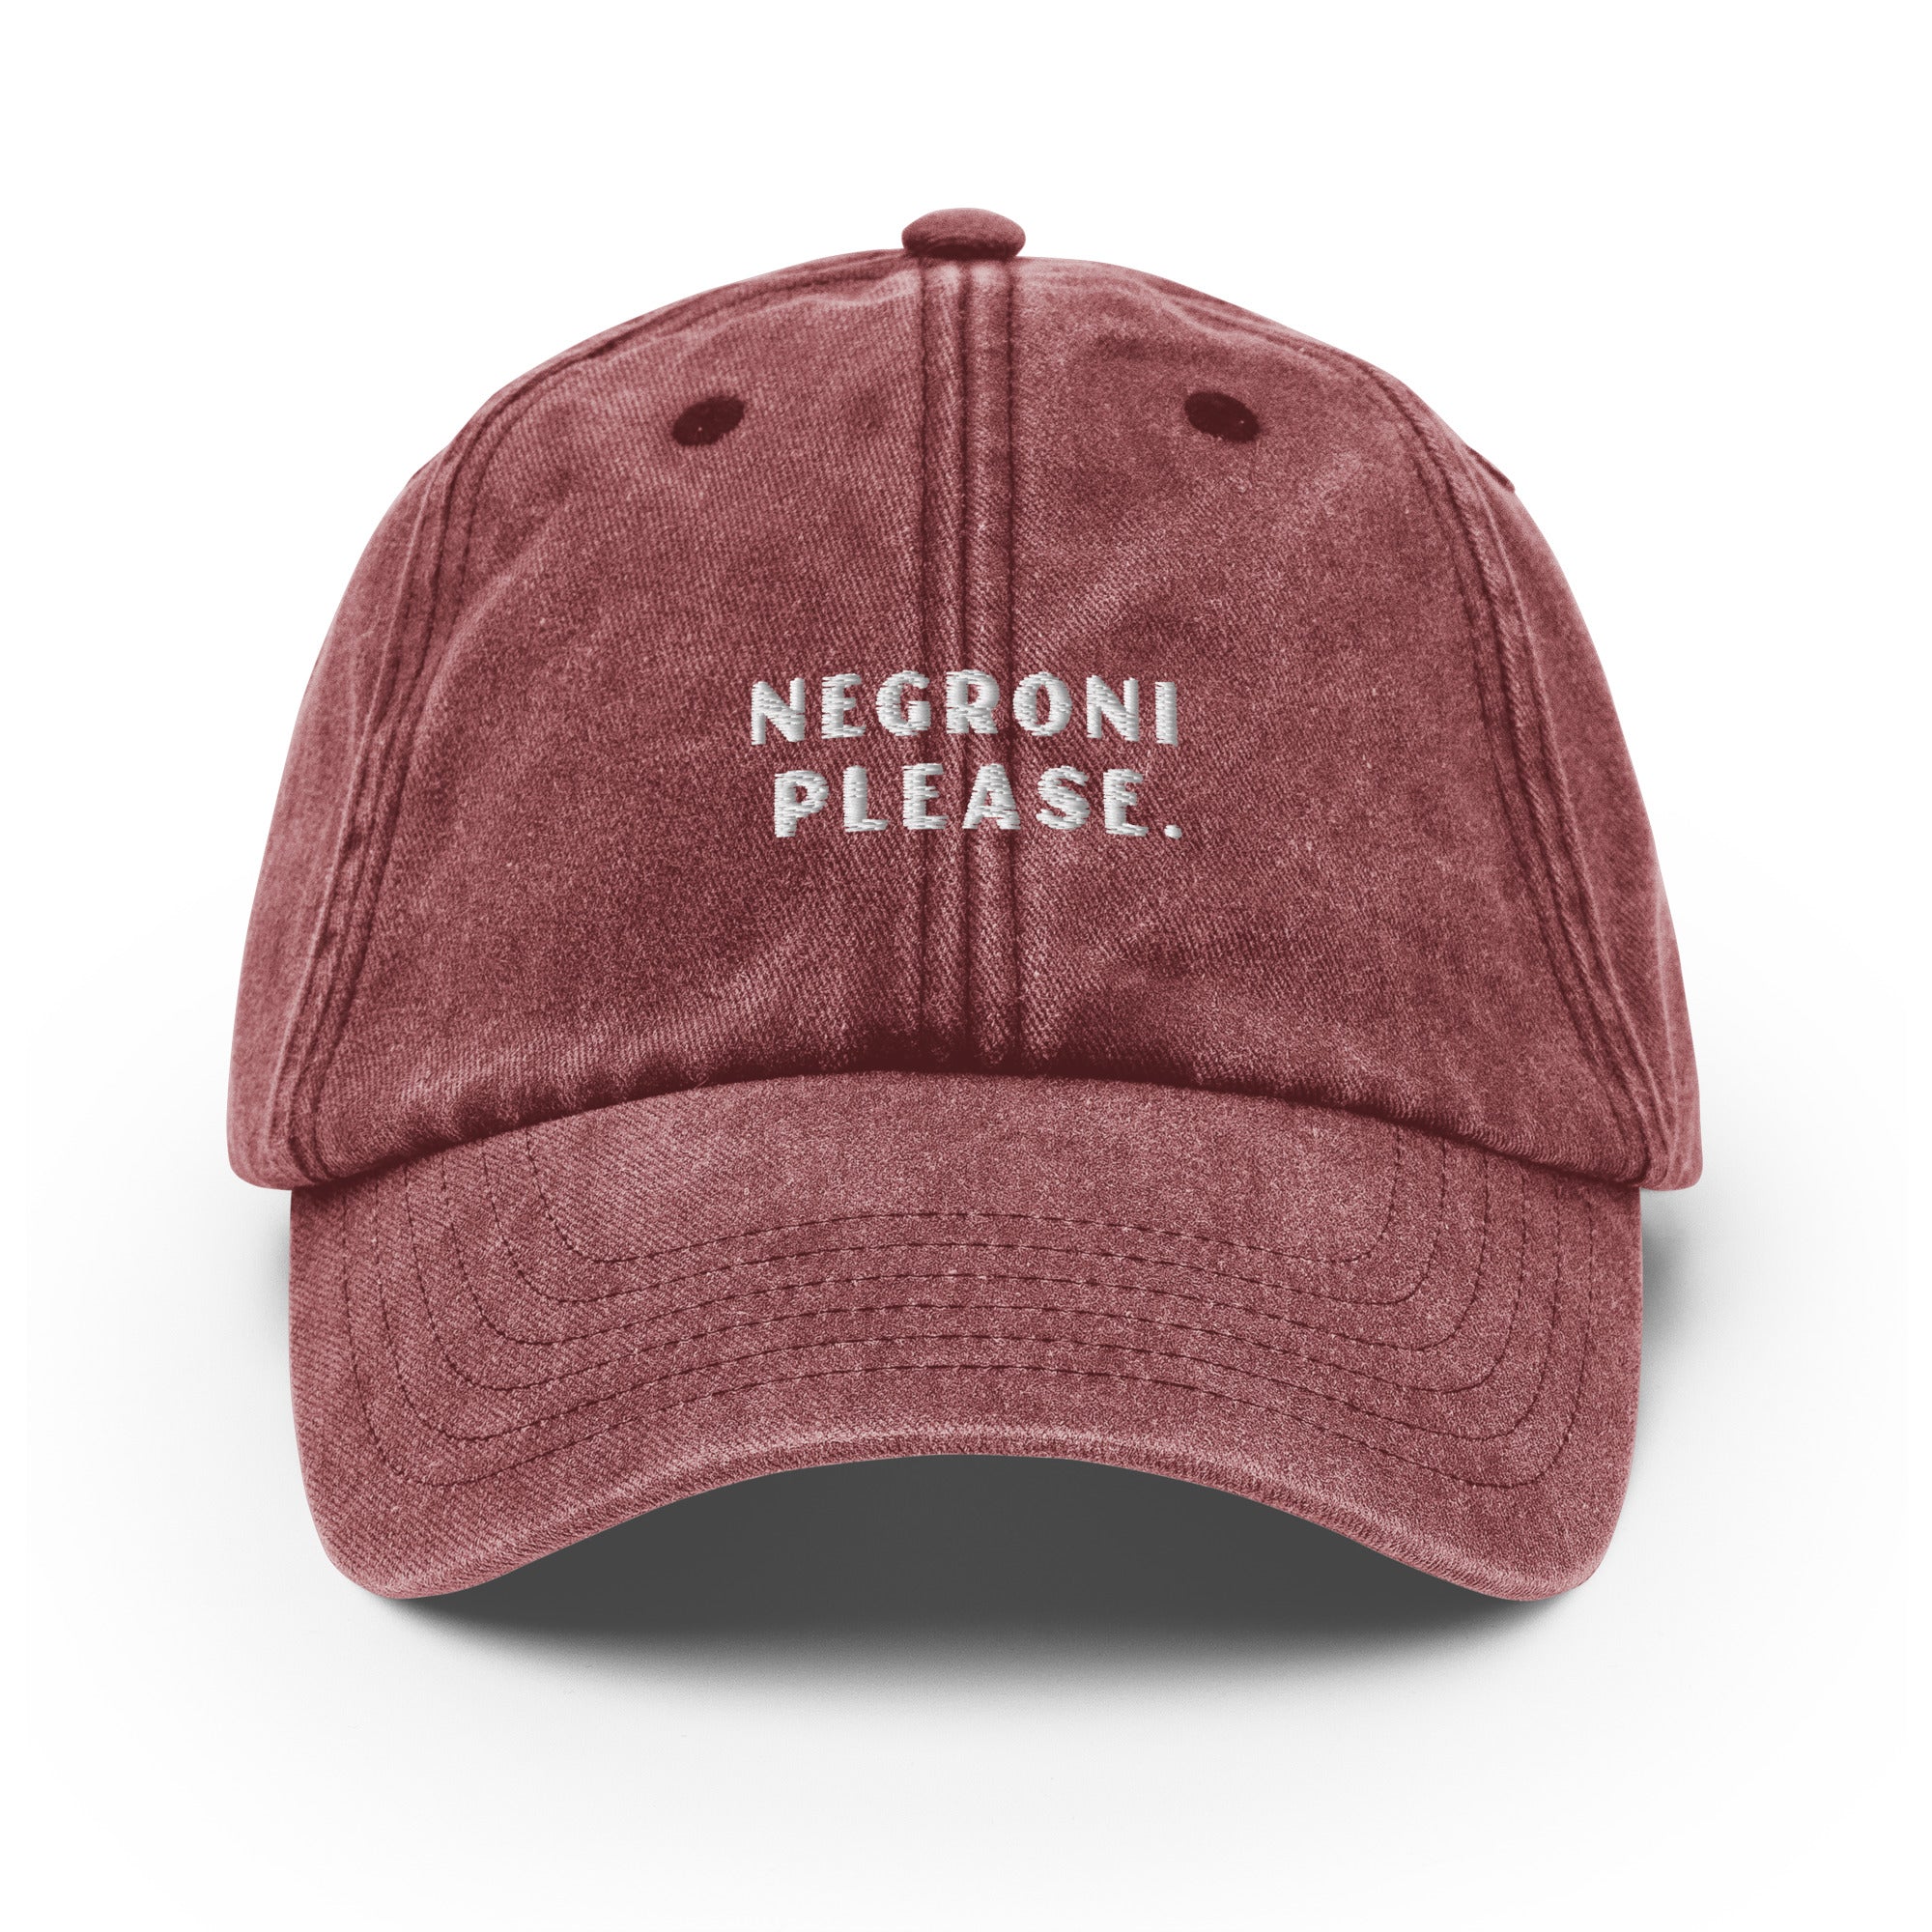 Negroni Please Vintage Cap - The Refined Spirit